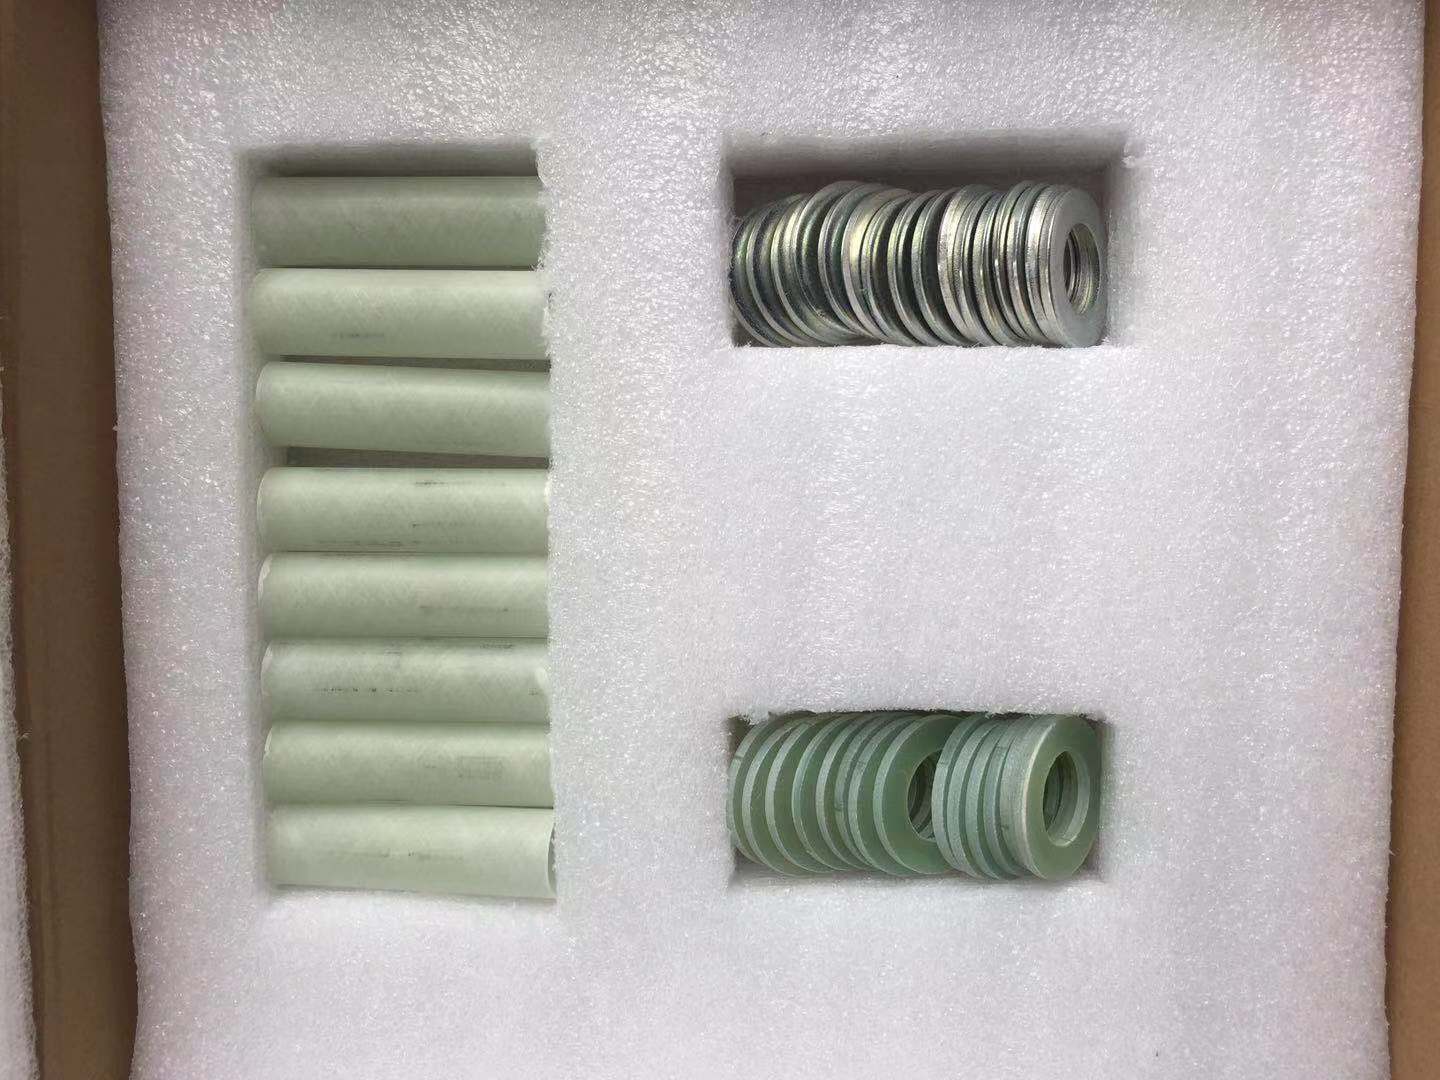 Type E Flange Insulation Gasket Kits